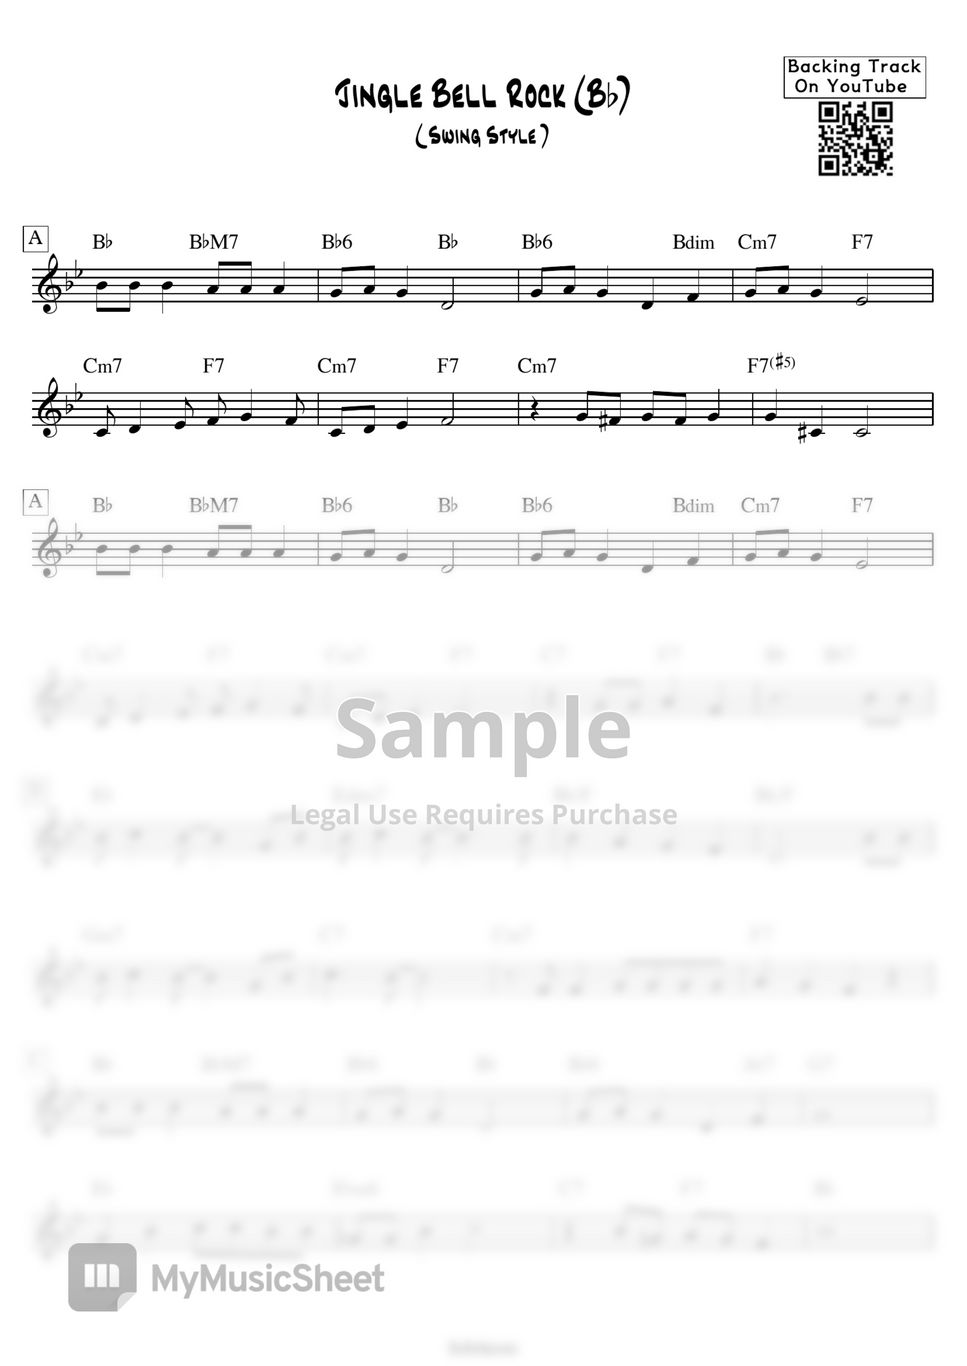 Carol - Jingle Bell Rock (Bb Key) Jazz Backing Track by BaBoSound